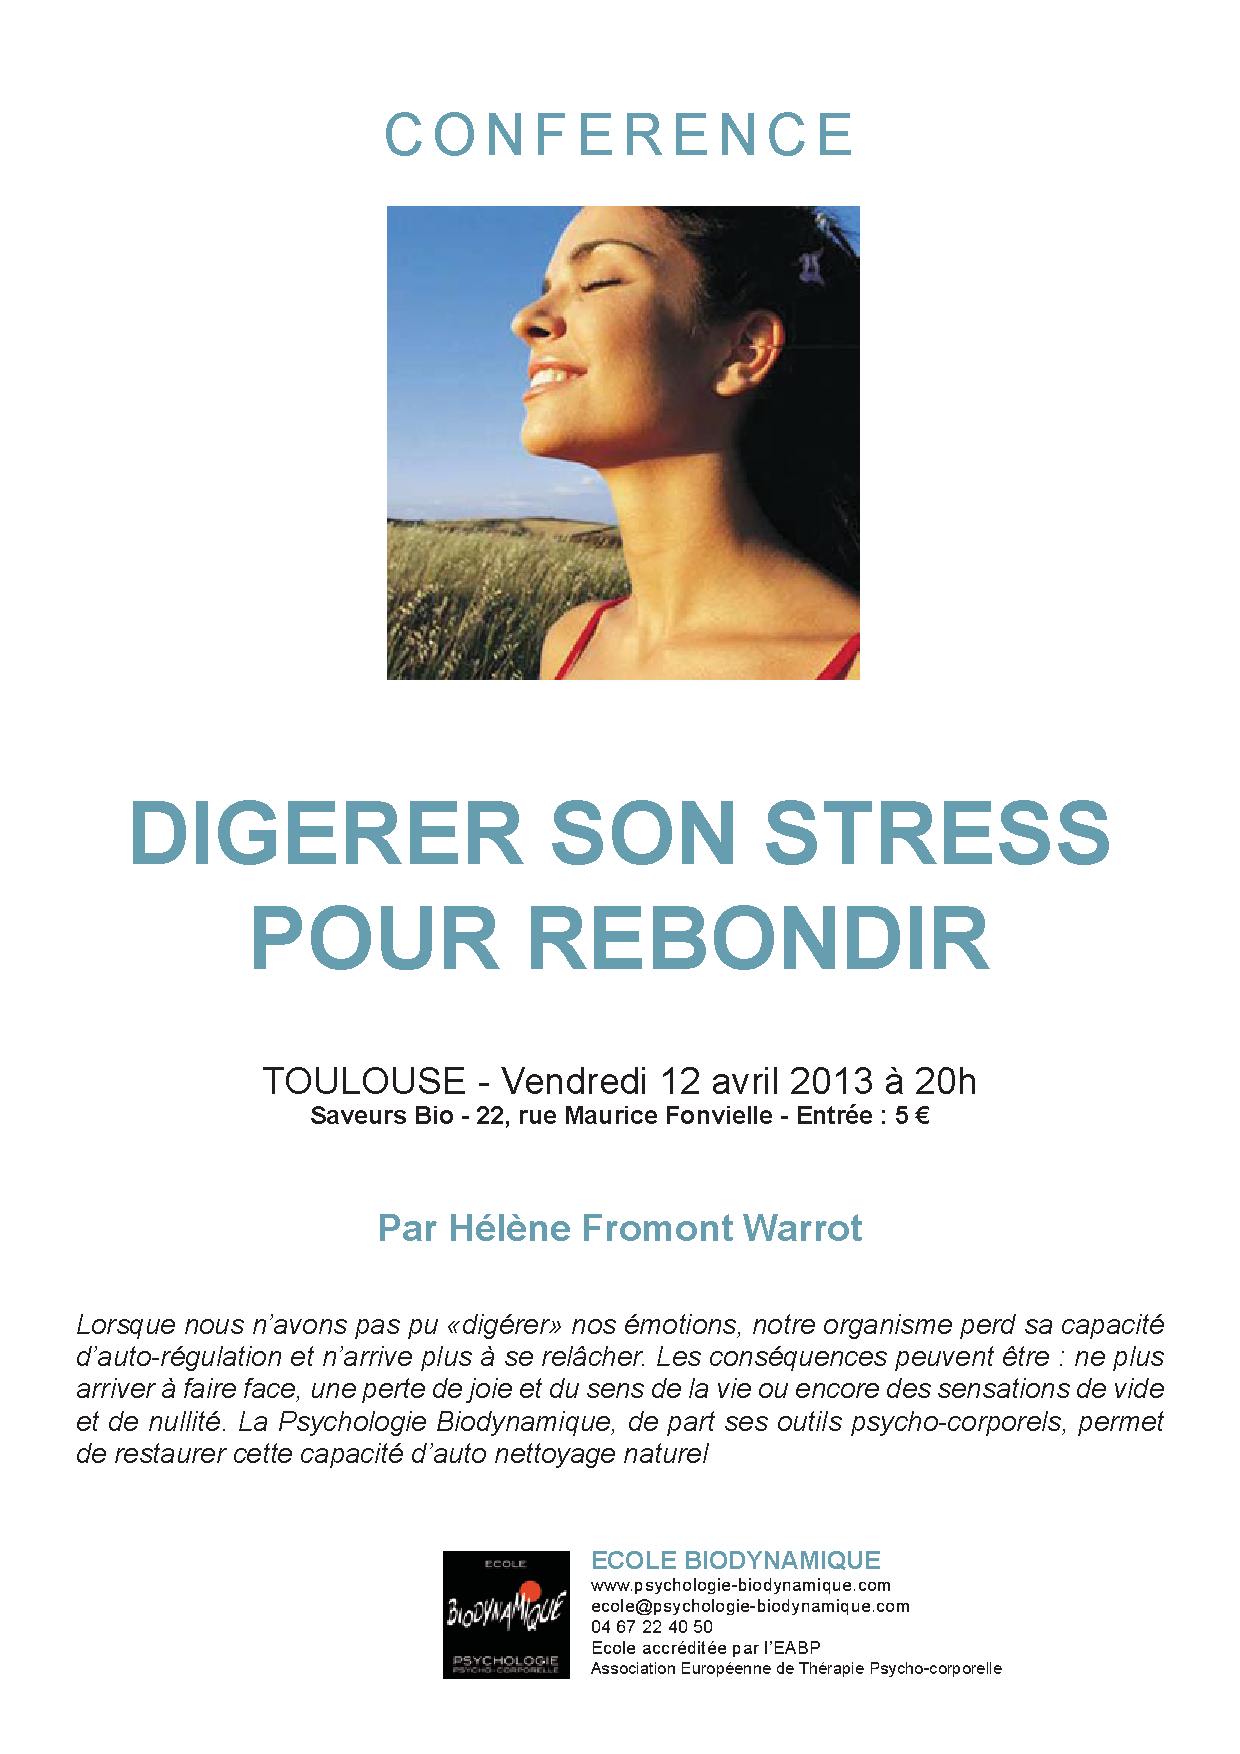 Conférence "Digérer son stress pour rebondir" 12 avril 2013, Toulouse